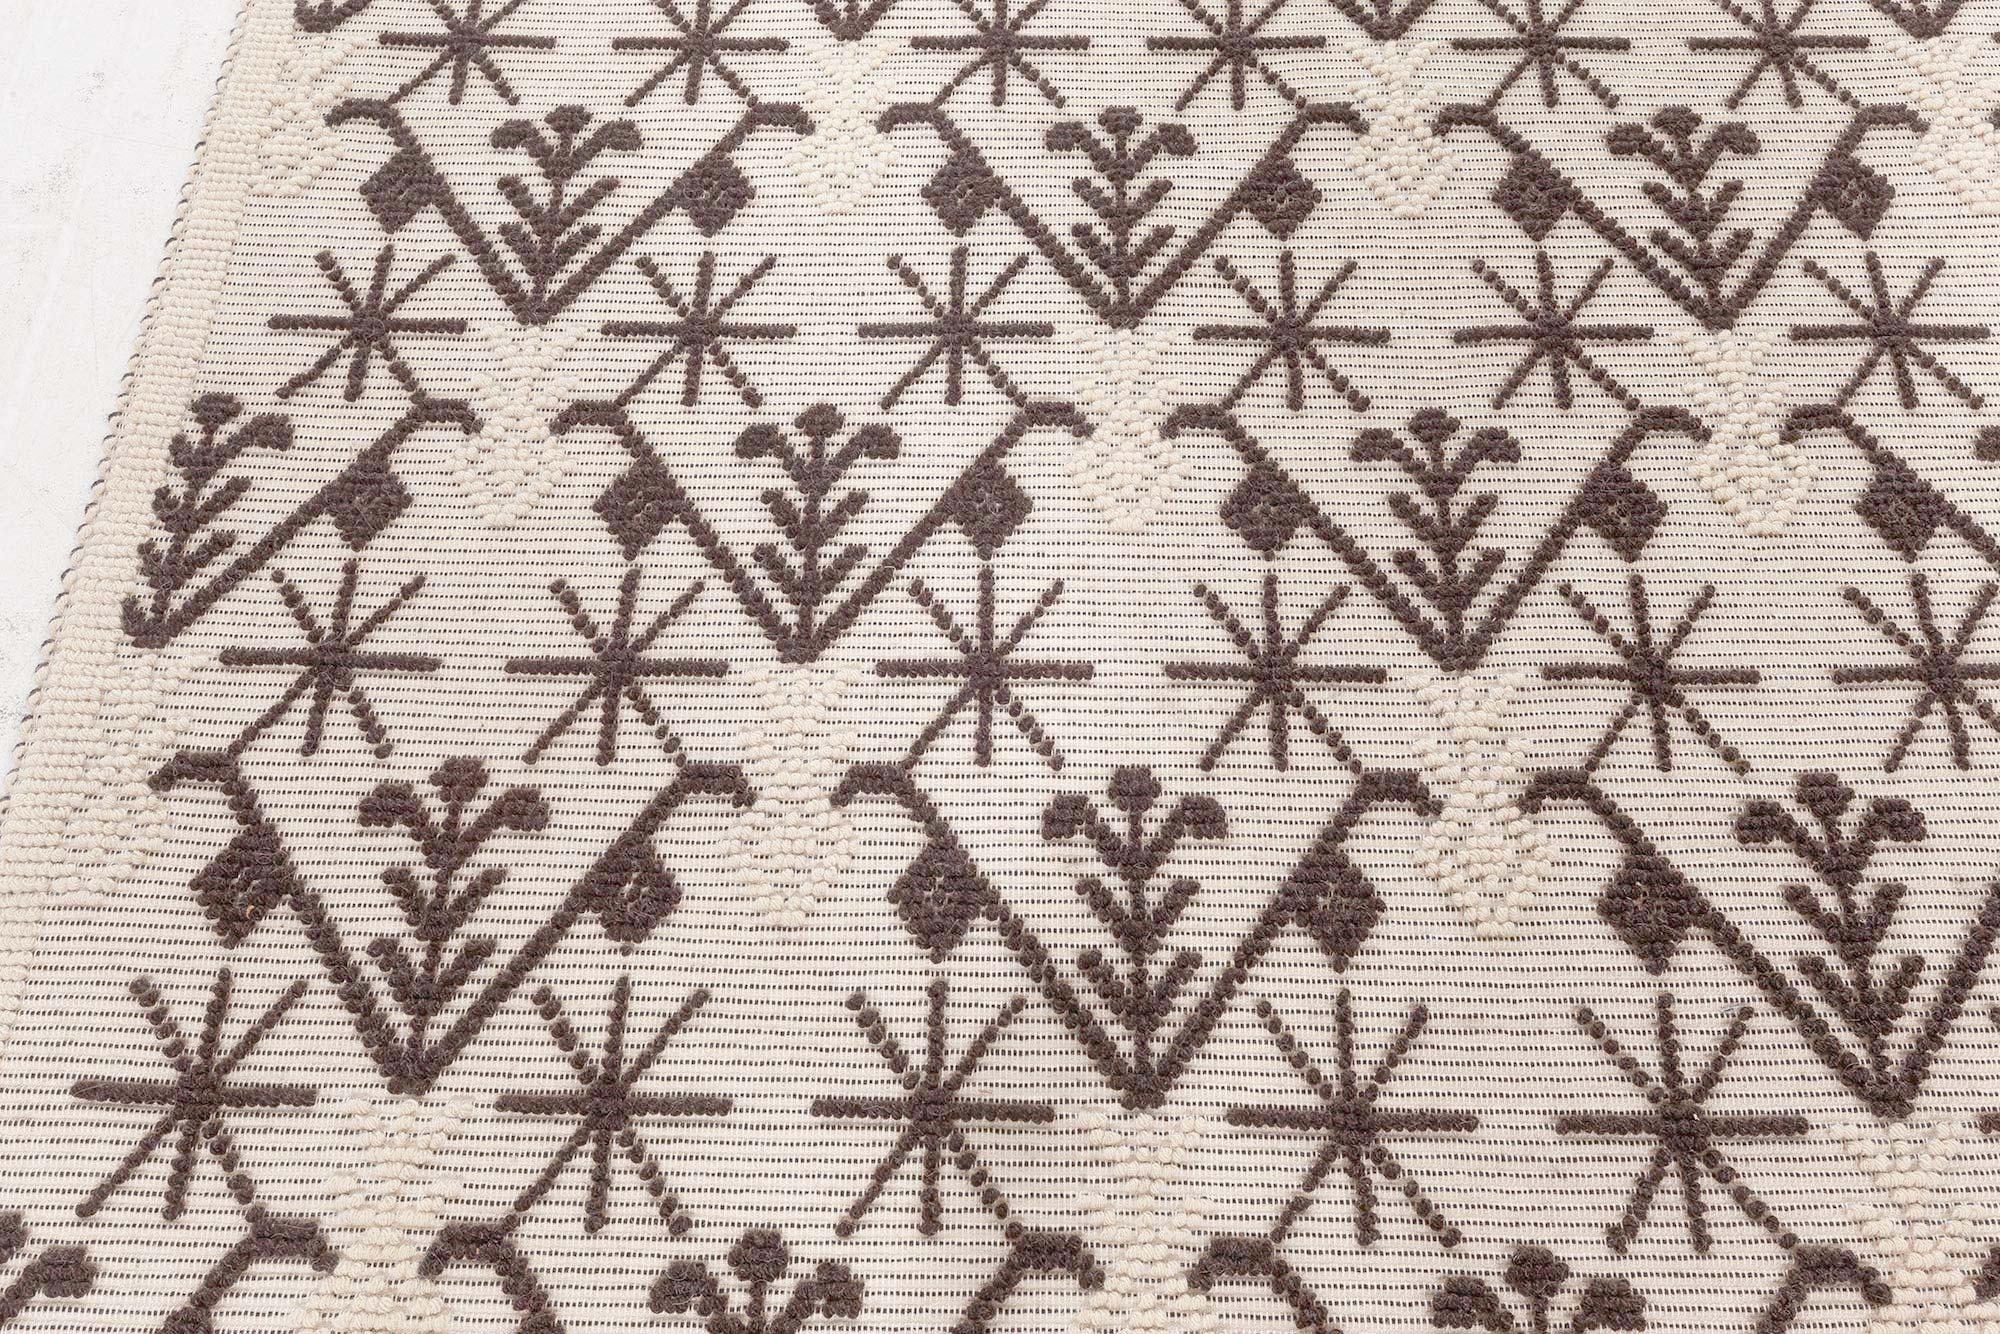 Contemporary High Low Flat Weave Sardinian Rug by Doris Leslie Blau
Size: 7'5